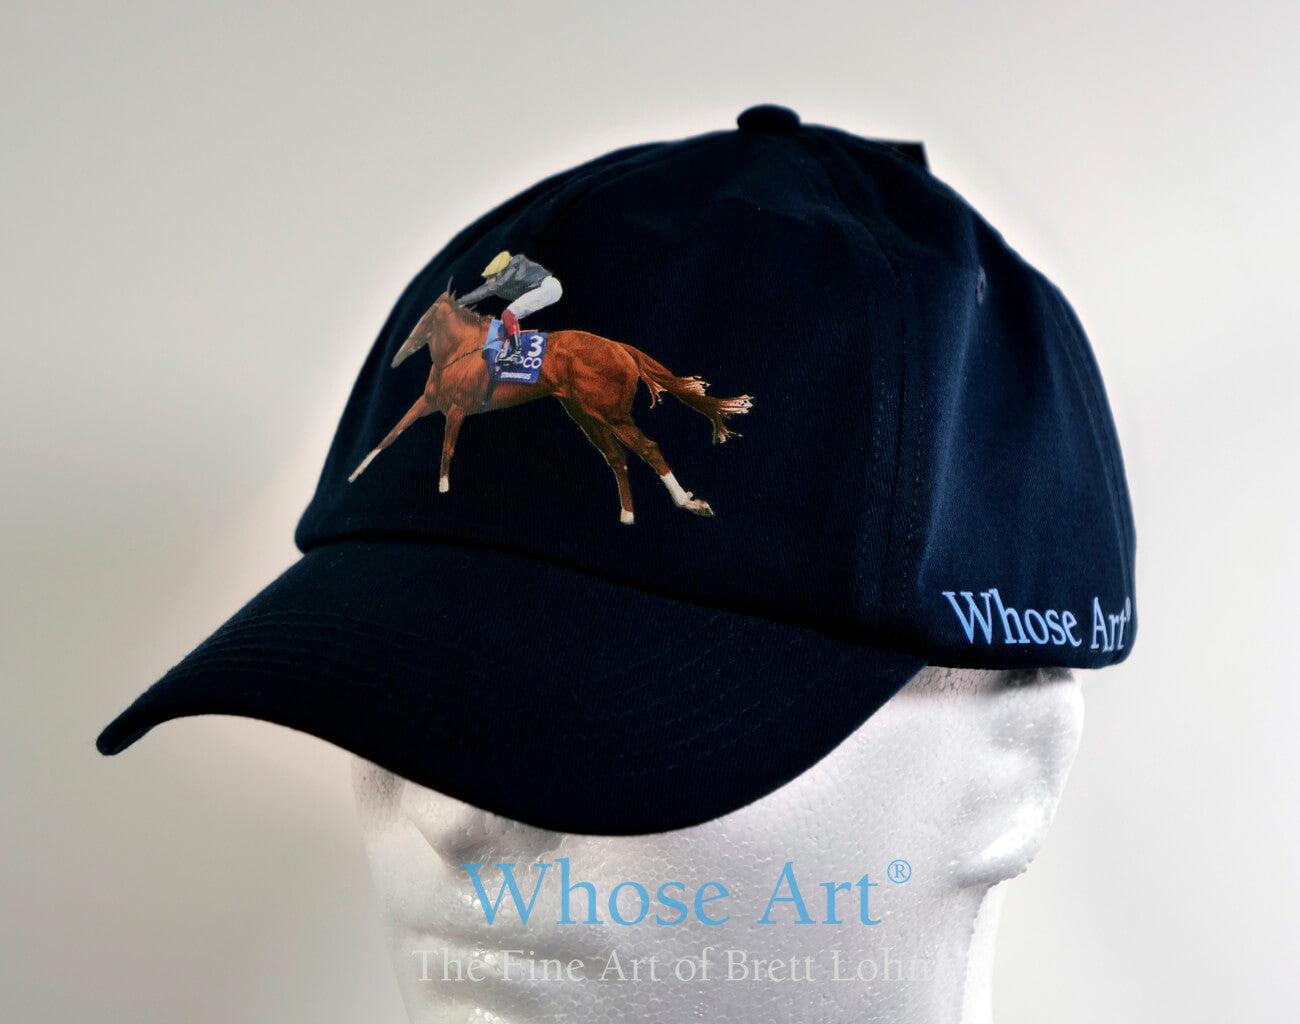 Stradivarius horse painting on an equestrian clothing baseball cap